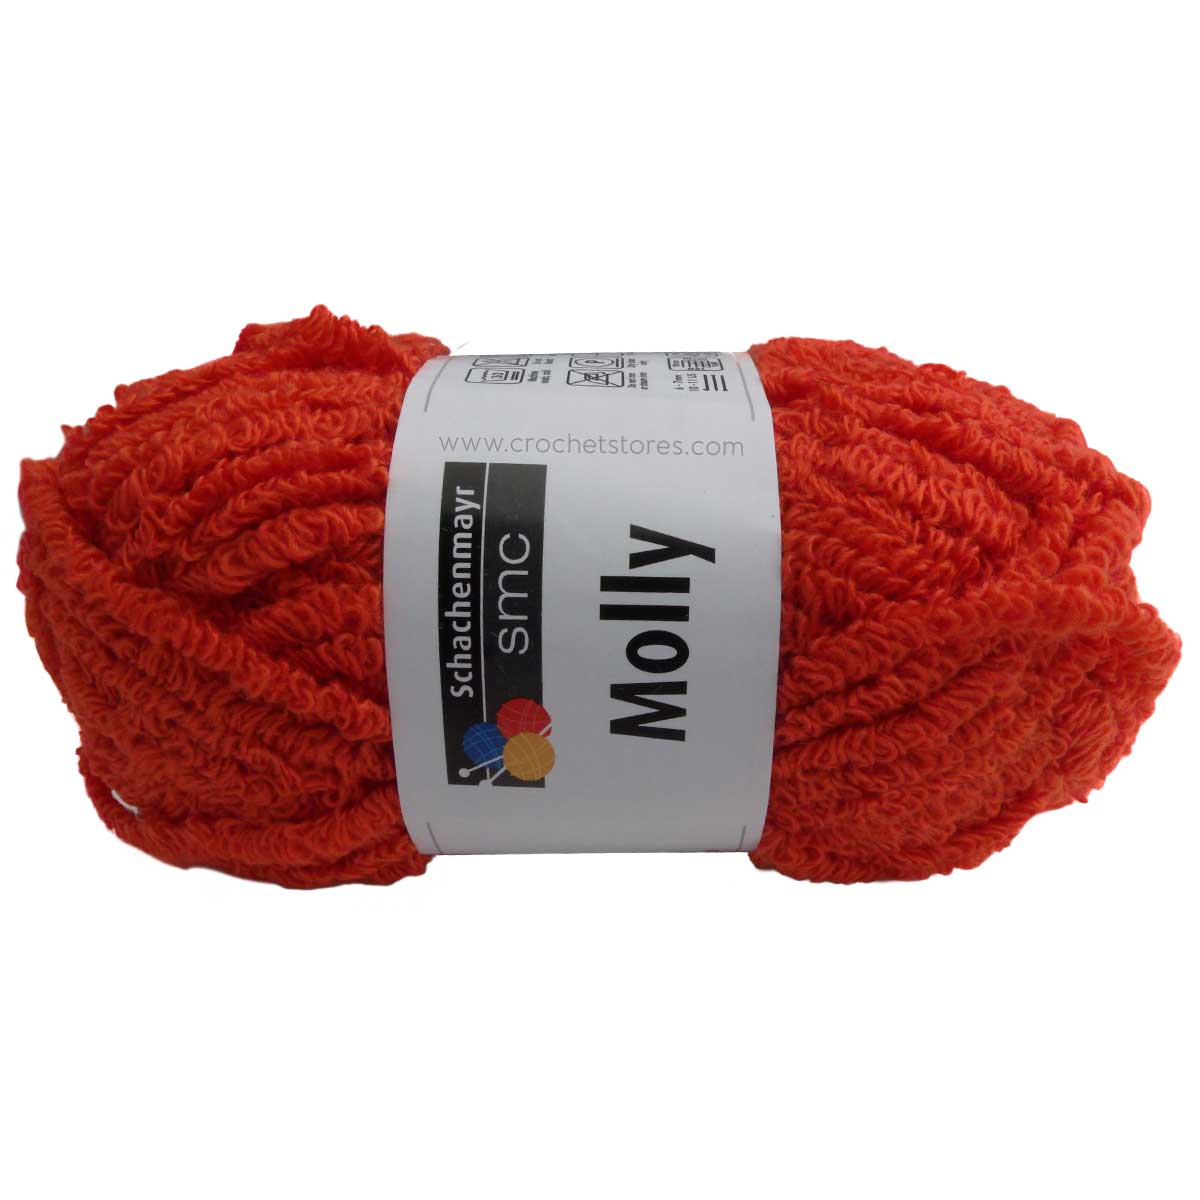 MOLLY - Crochetstores9807532-254082700934065